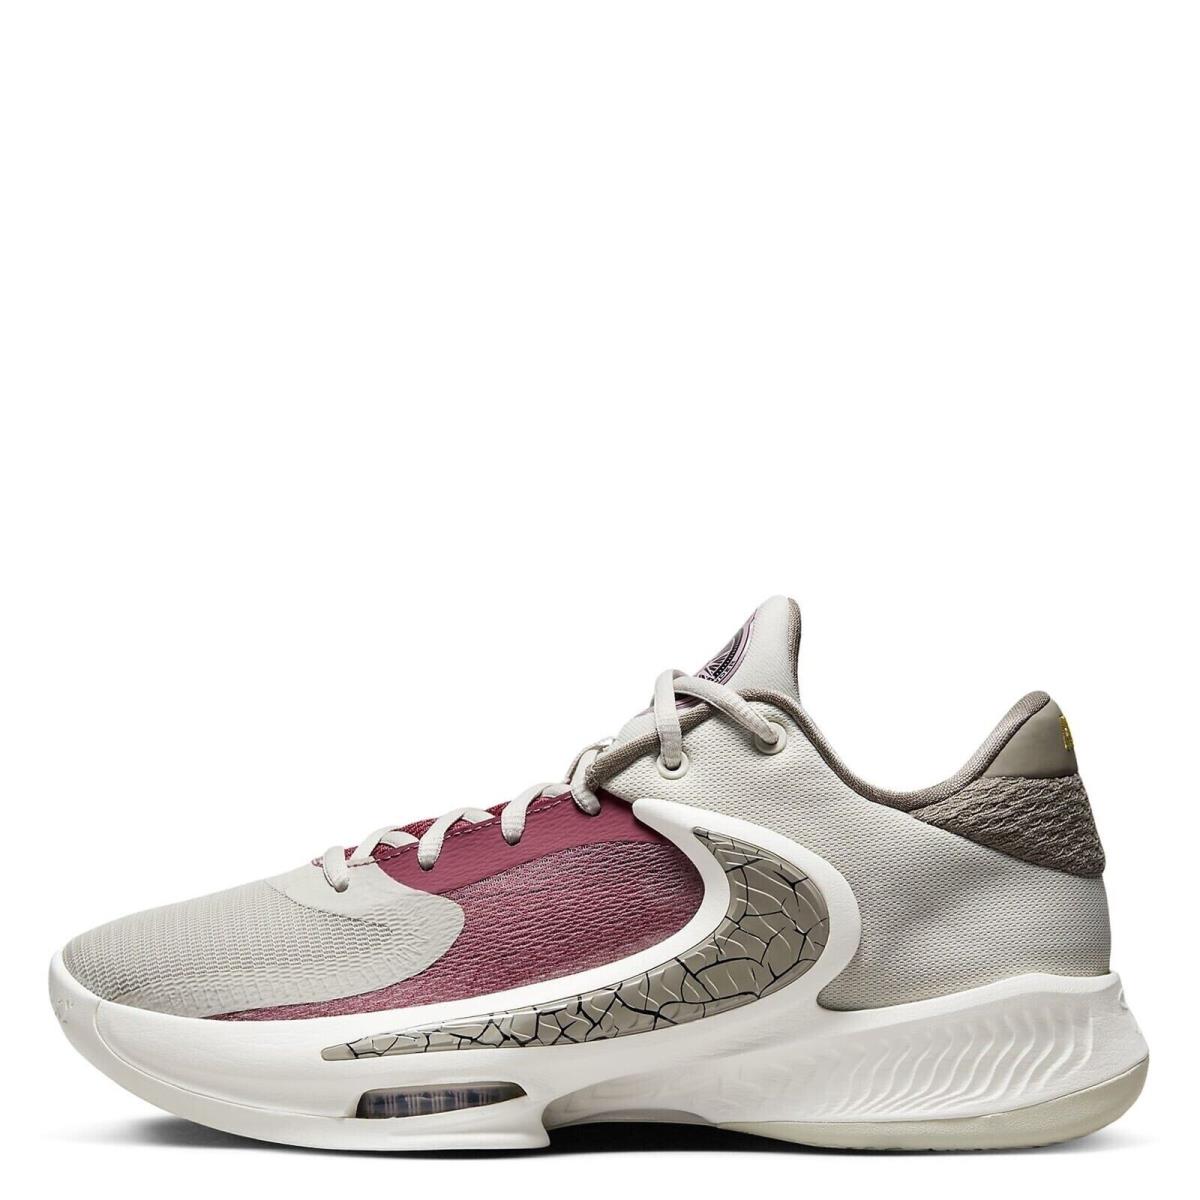 Nike Mens Zoom Freak 4 Basketball Shoes DJ6149 002 - LIGHT BONE /MOON FOSSIL SAIL